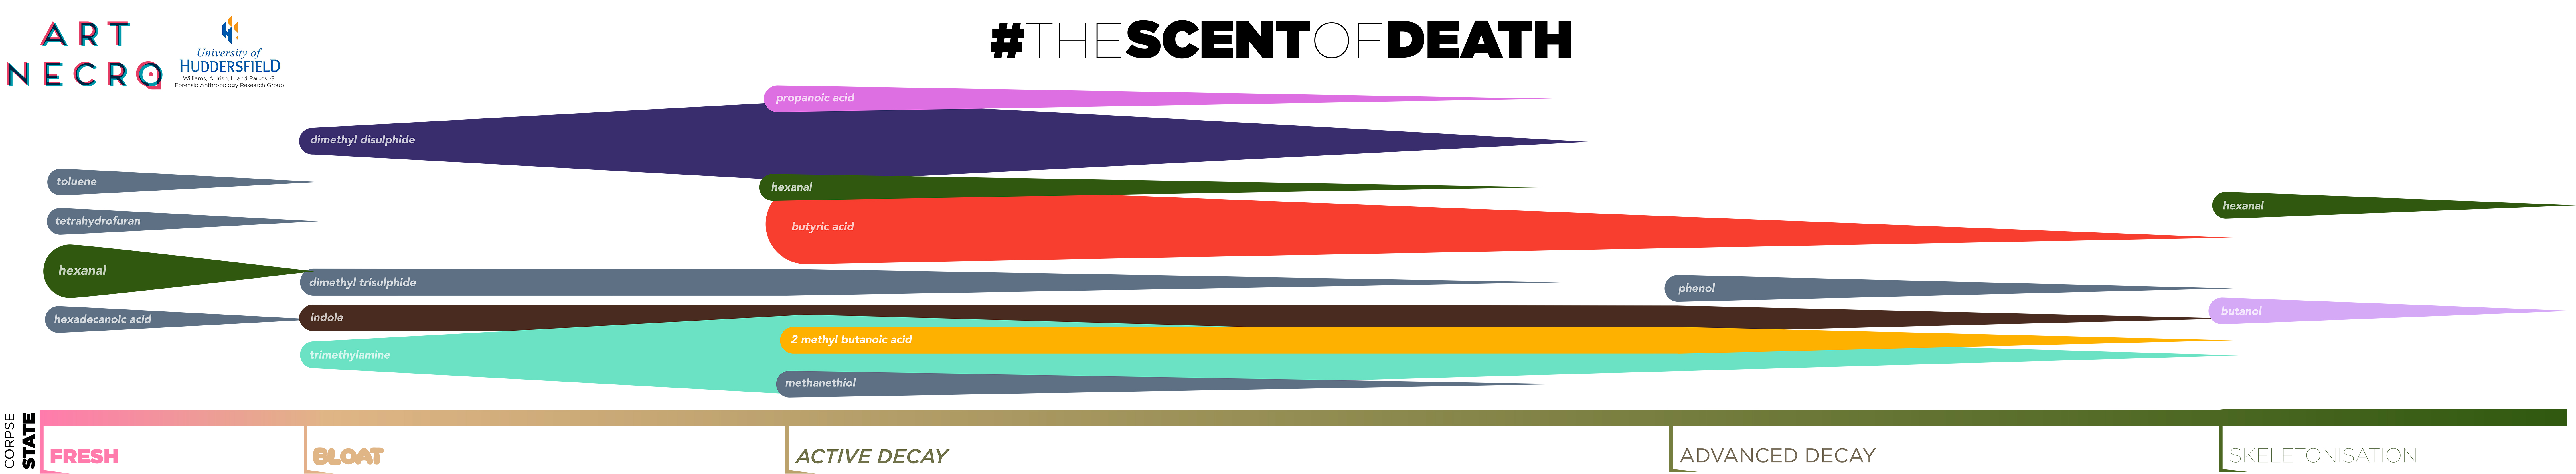 Scent of Death timeline